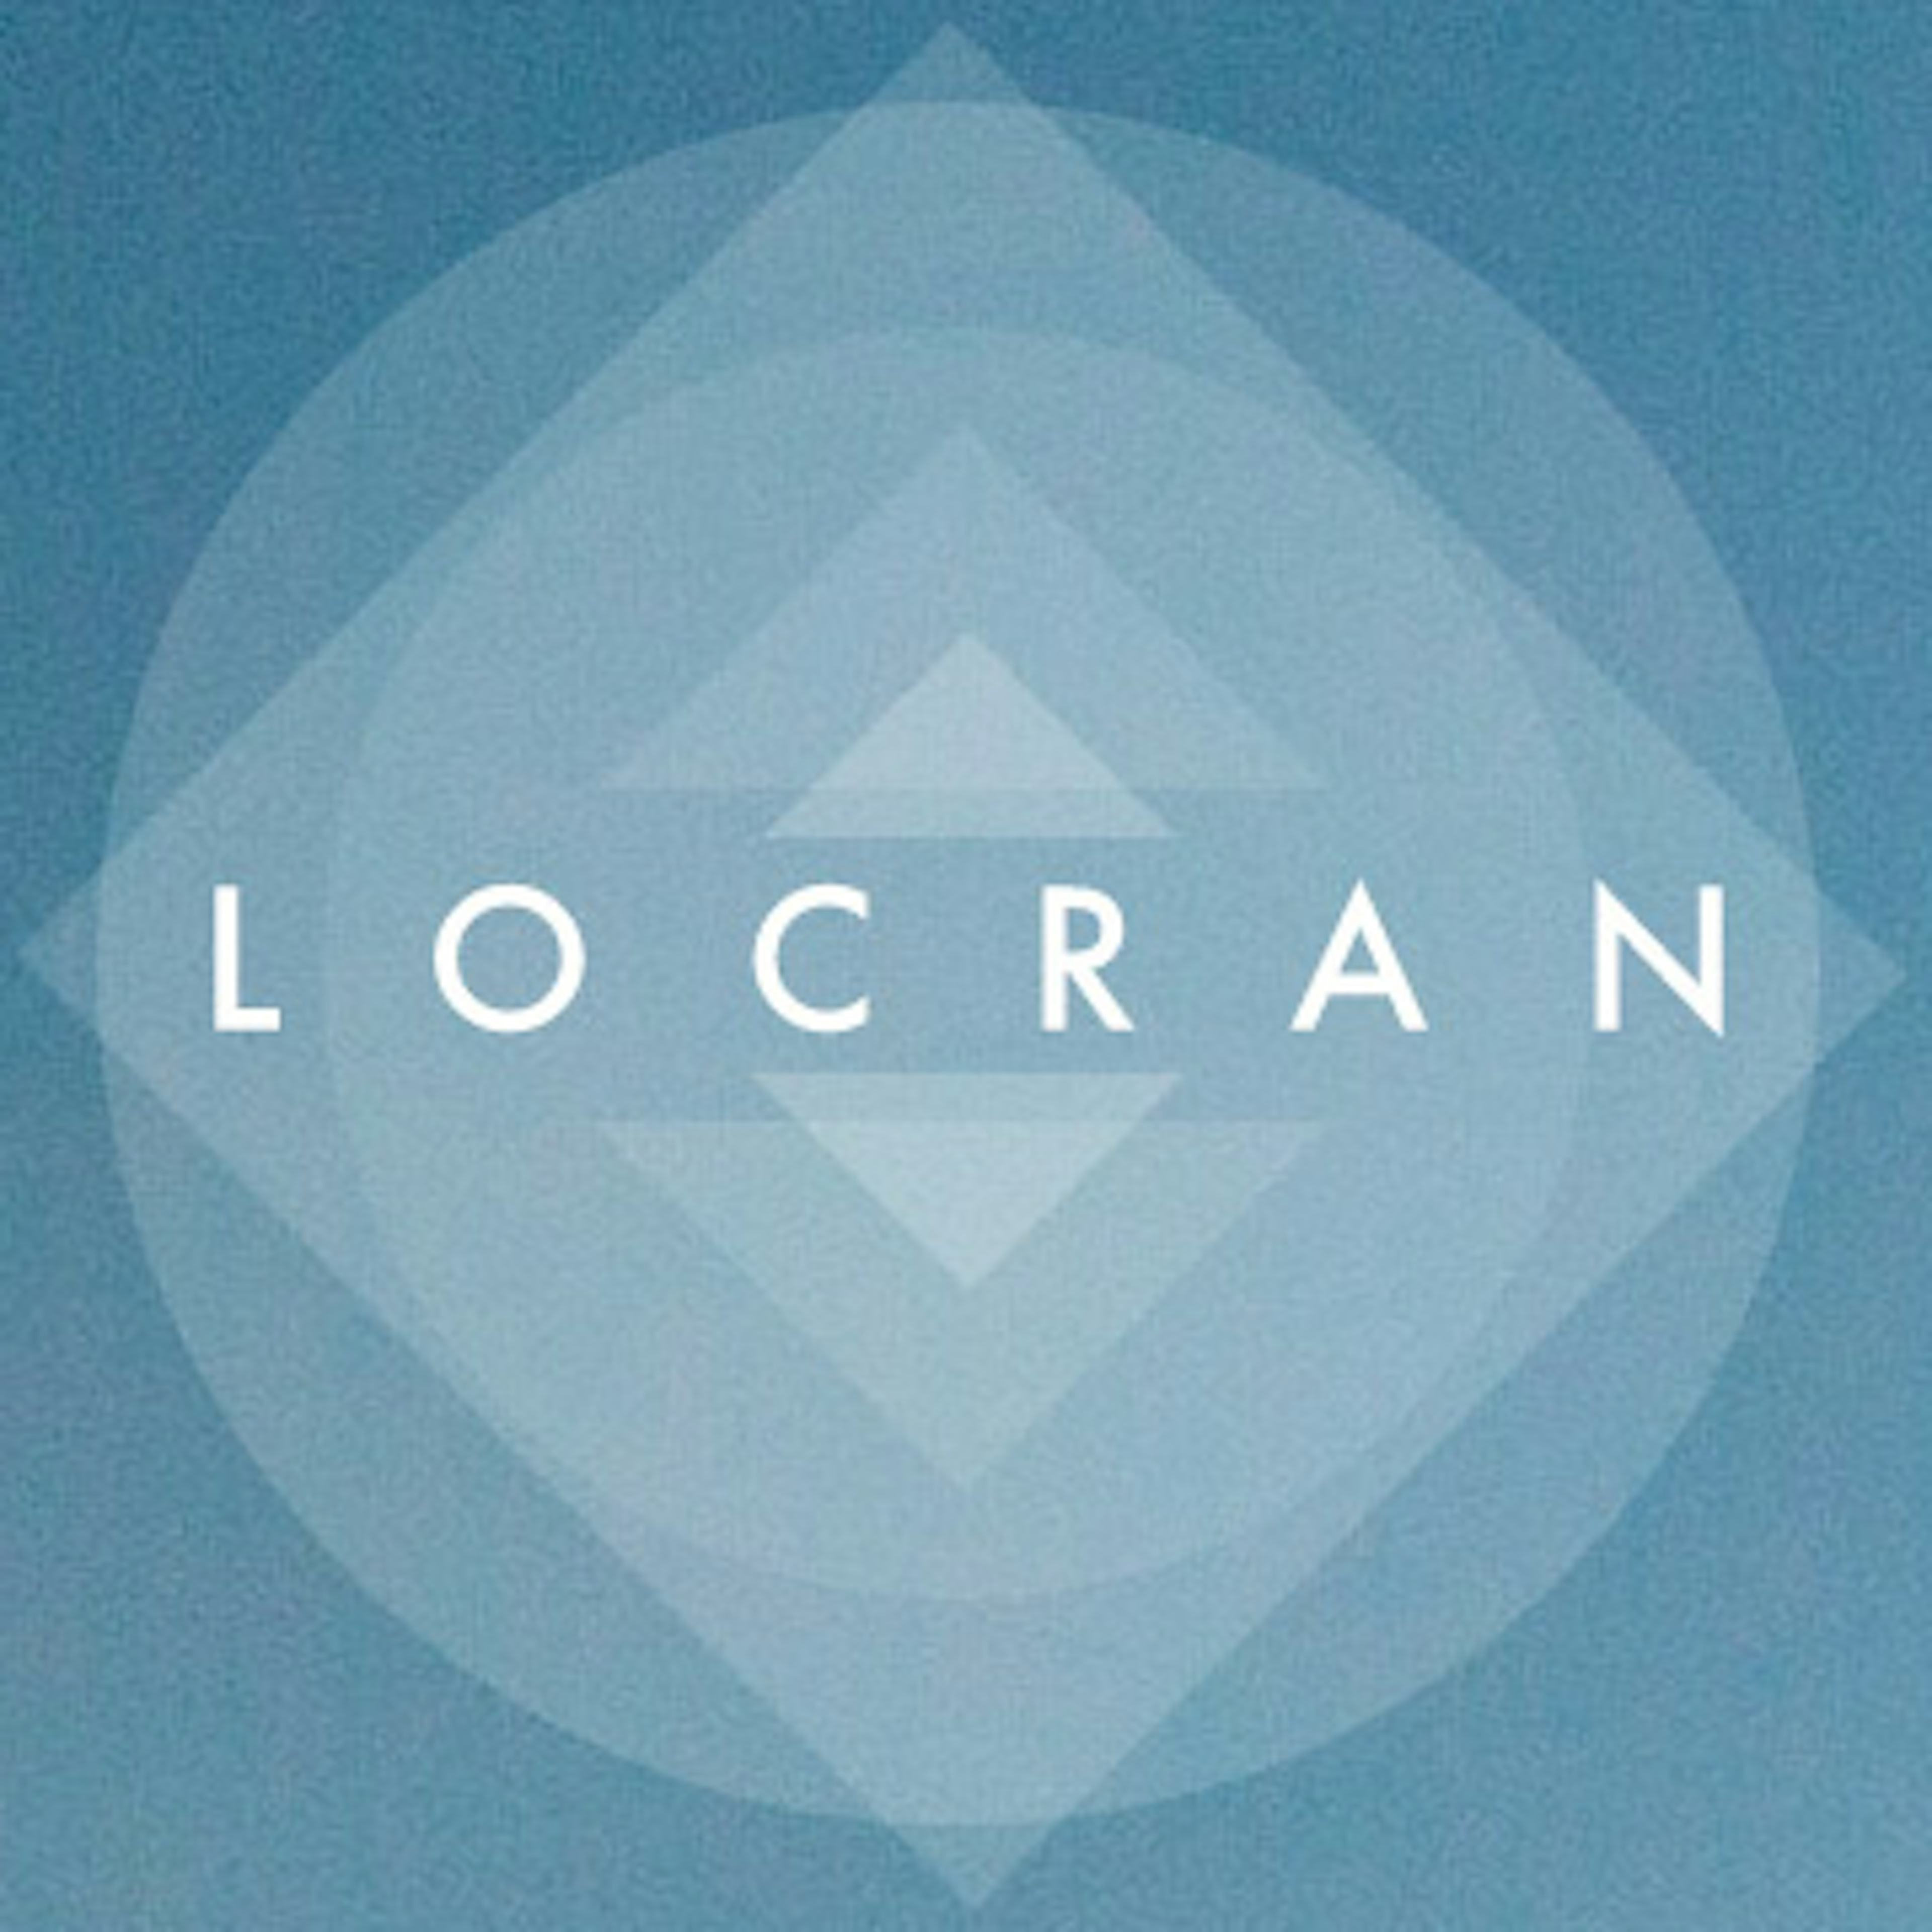 Locran artwork